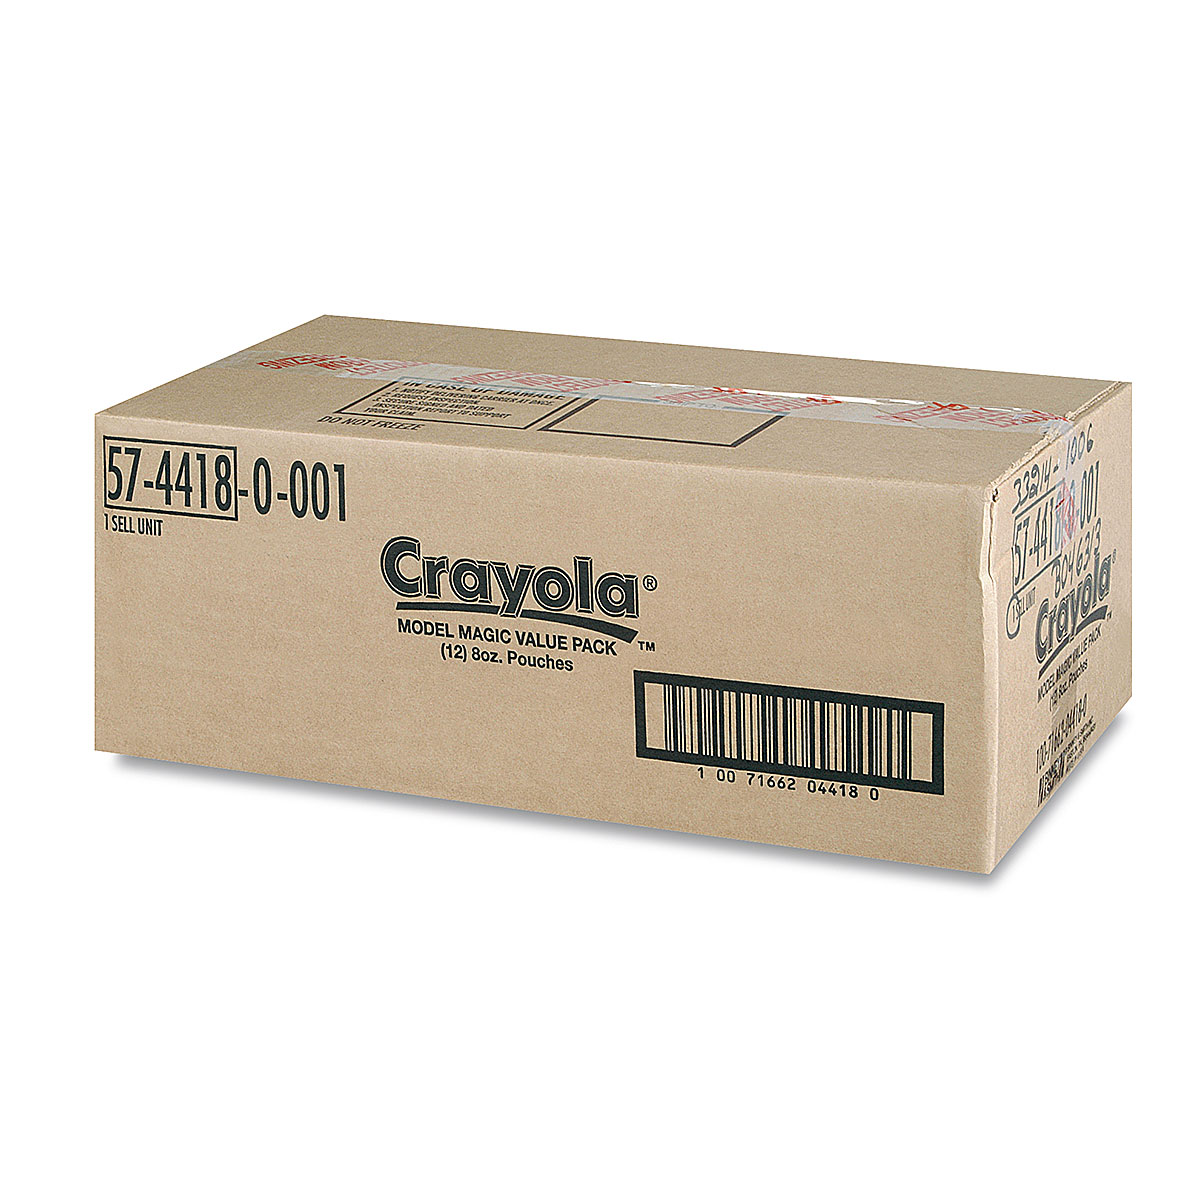 Crayola Model Magic Modeling Clay Single Pack, 1oz, WHITE - Pack of 6 or 12  pcs